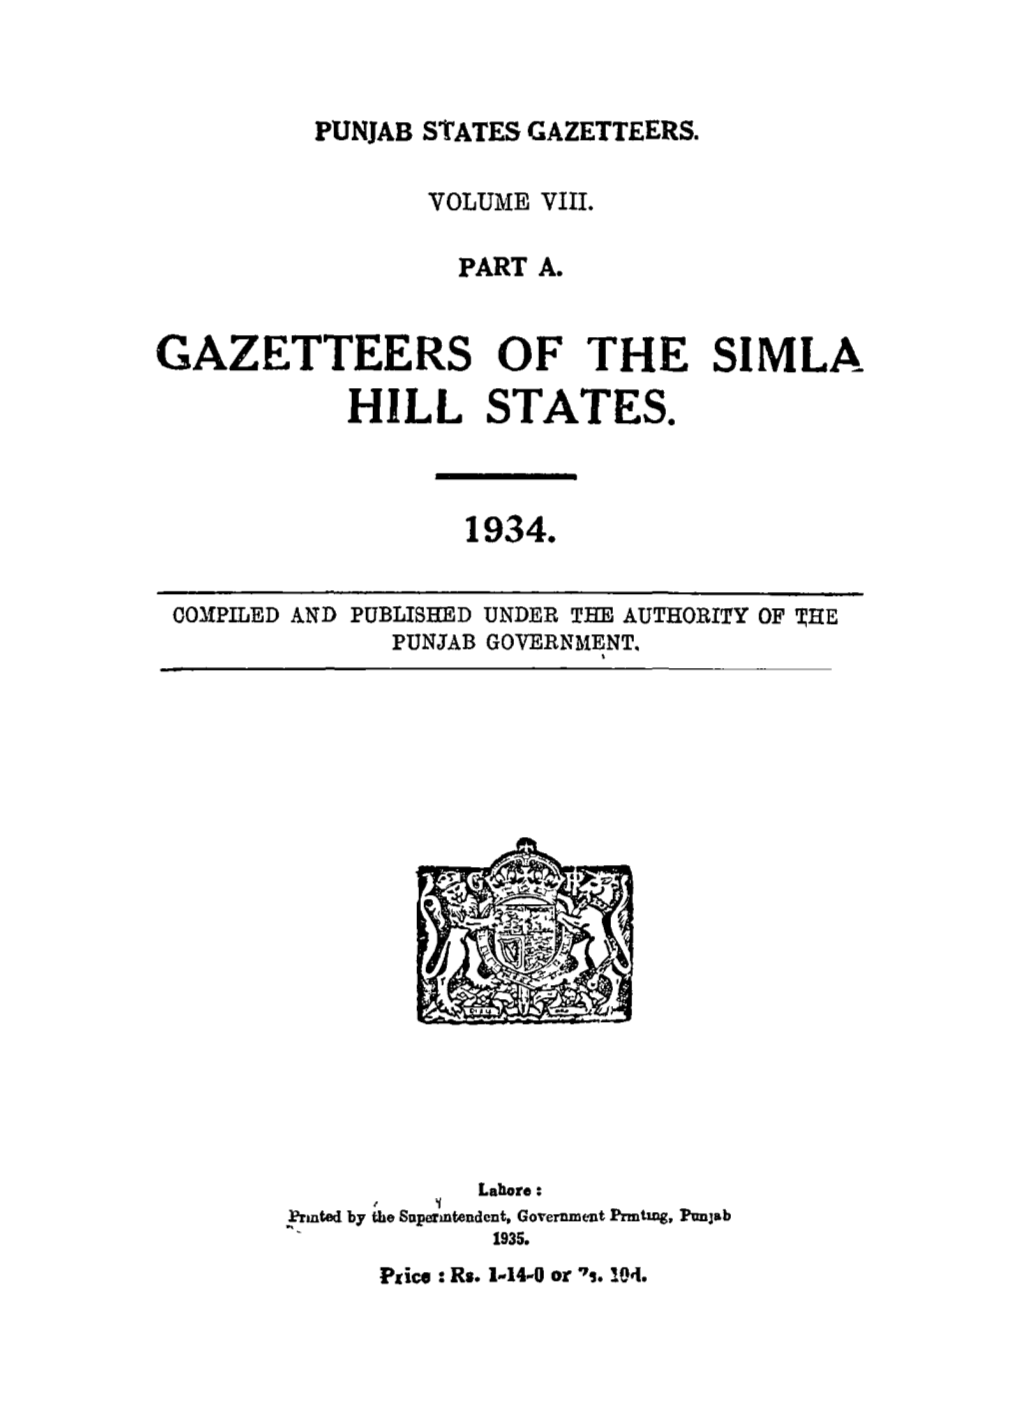 Gazetteers of the Simla Hill States